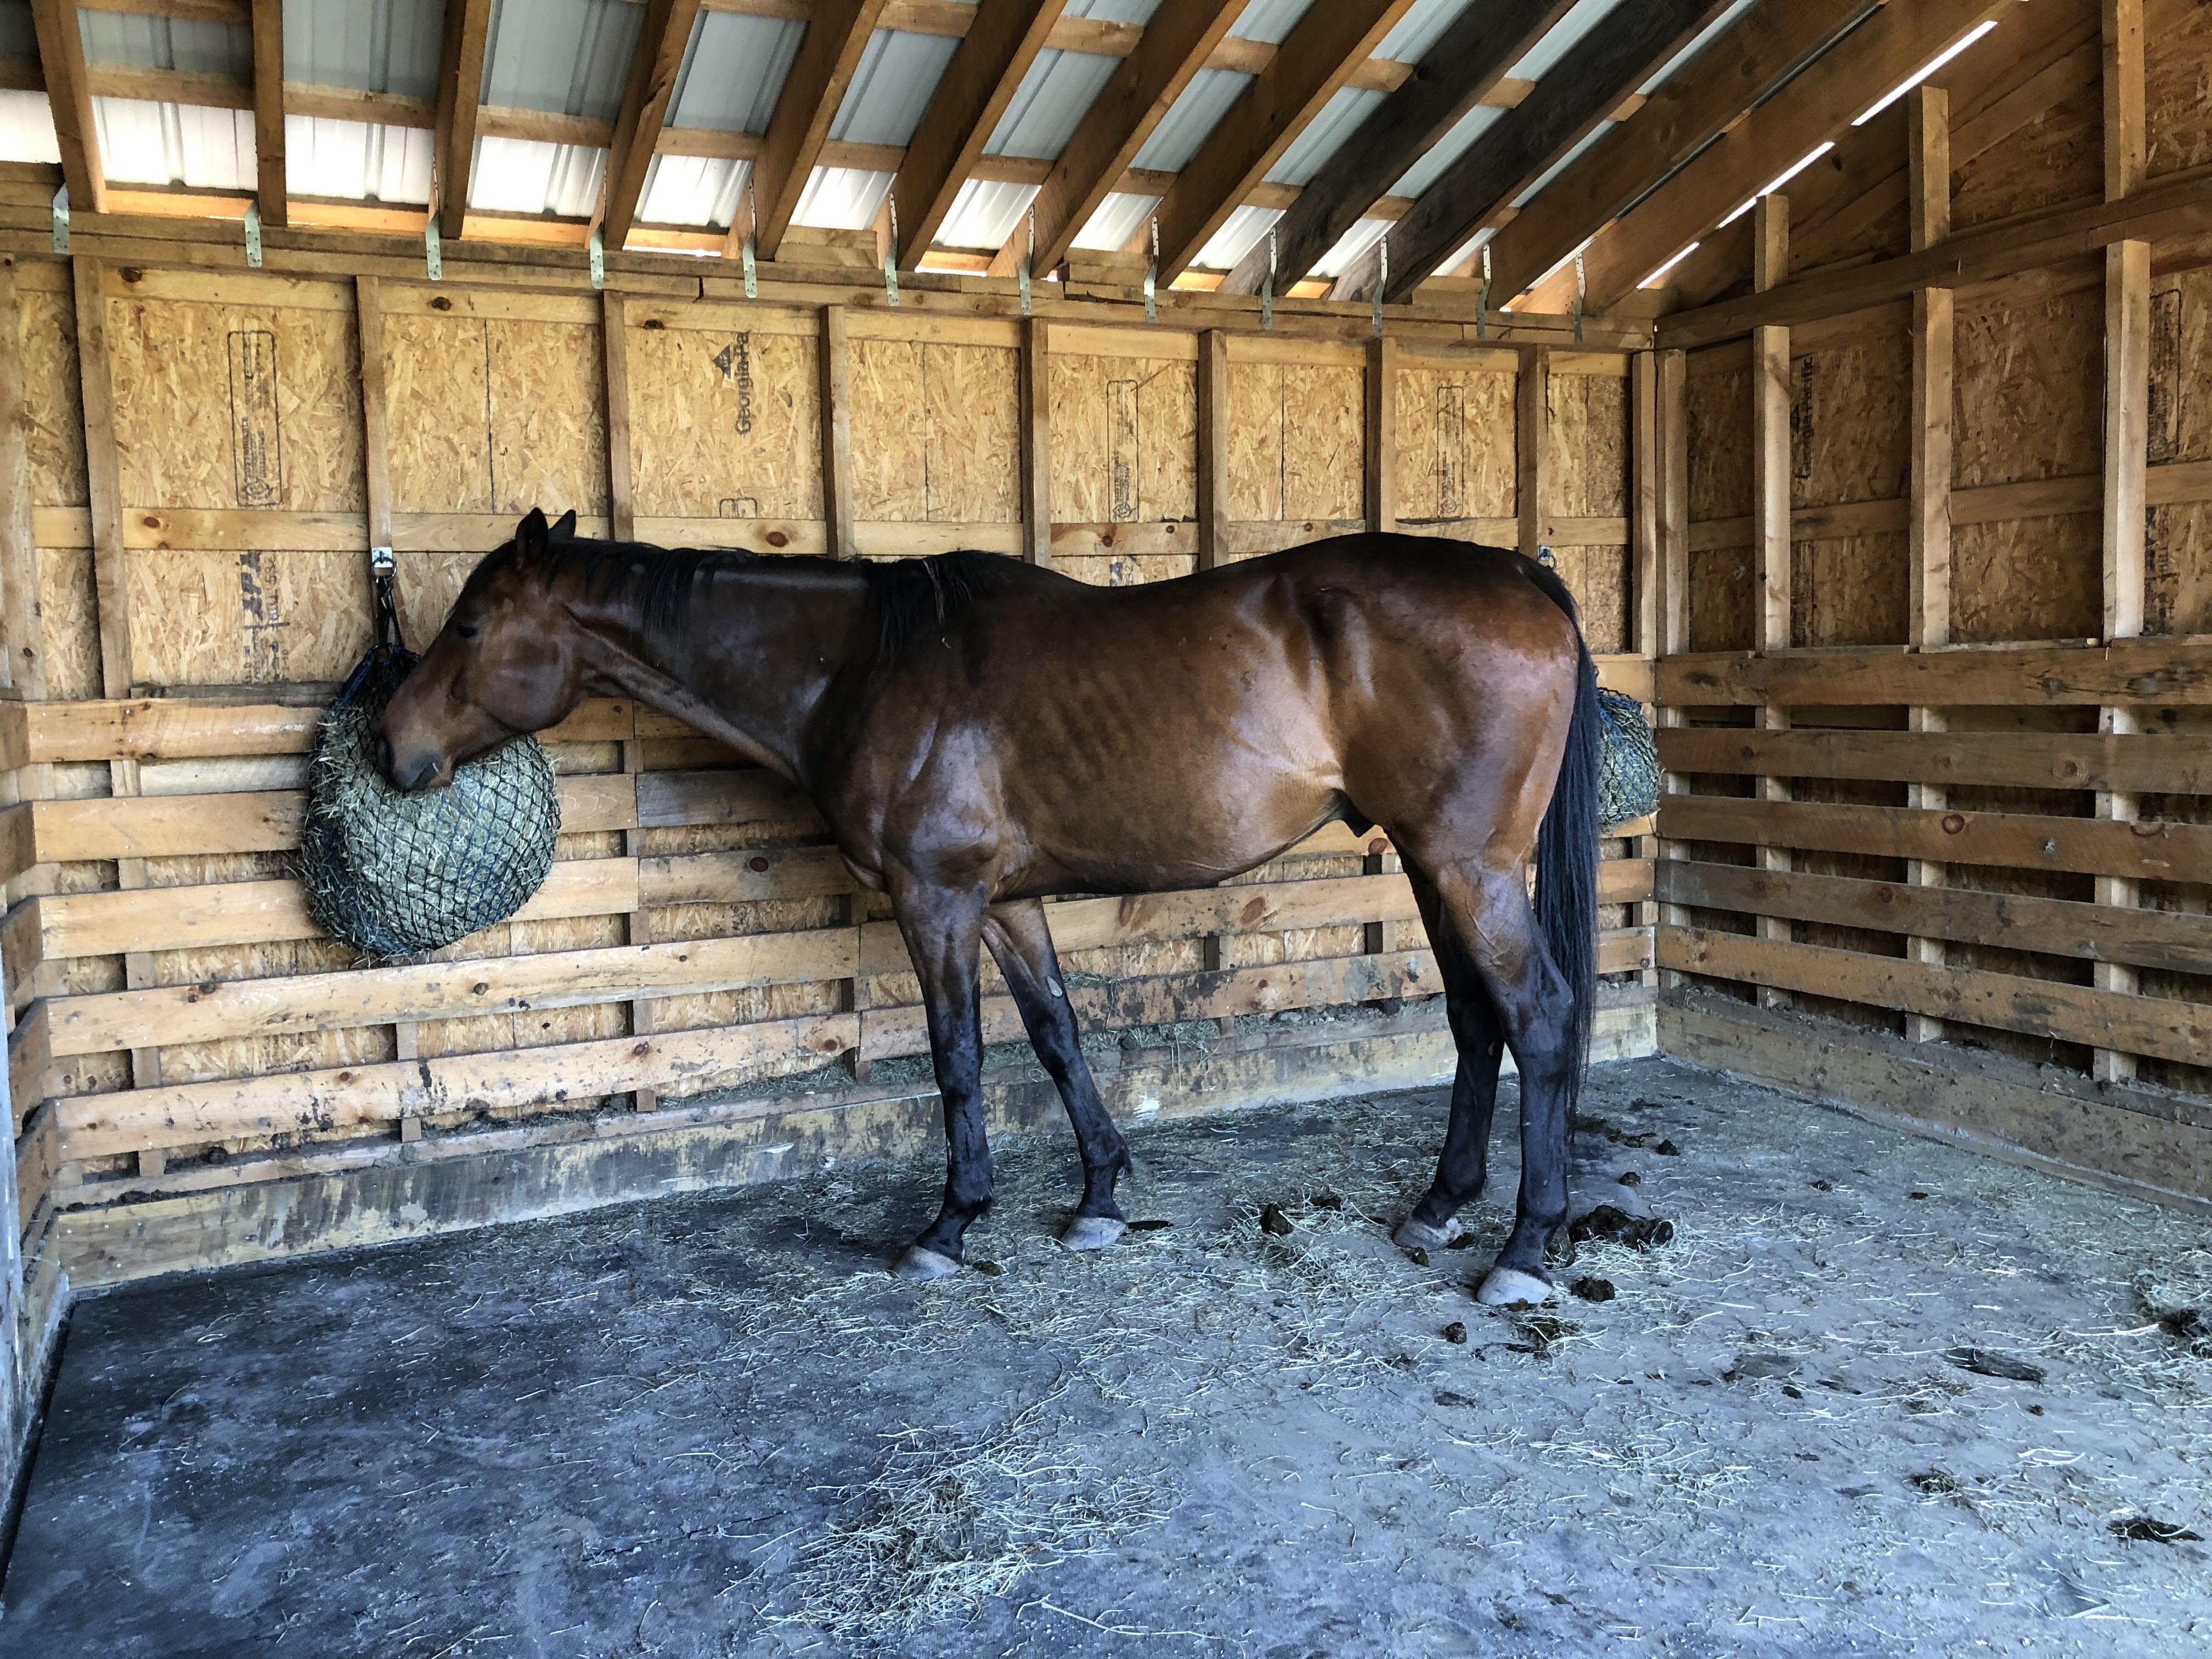 Horse Stall Interlocking Center Mat 3/4 Inch x 4x6 Ft. customer review photo 2